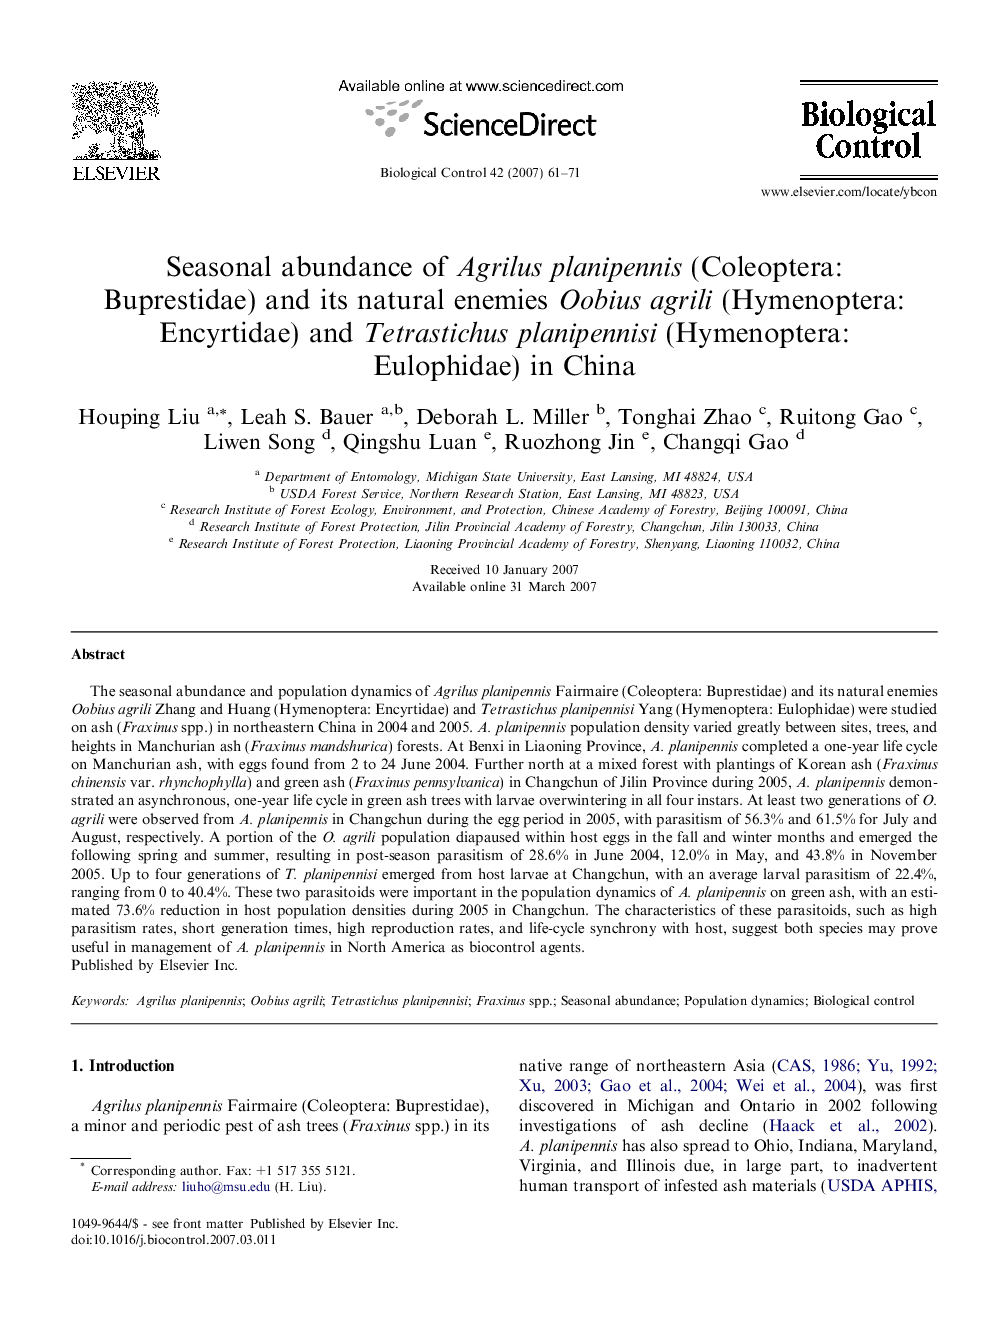 Seasonal abundance of Agrilus planipennis (Coleoptera: Buprestidae) and its natural enemies Oobius agrili (Hymenoptera: Encyrtidae) and Tetrastichus planipennisi (Hymenoptera: Eulophidae) in China